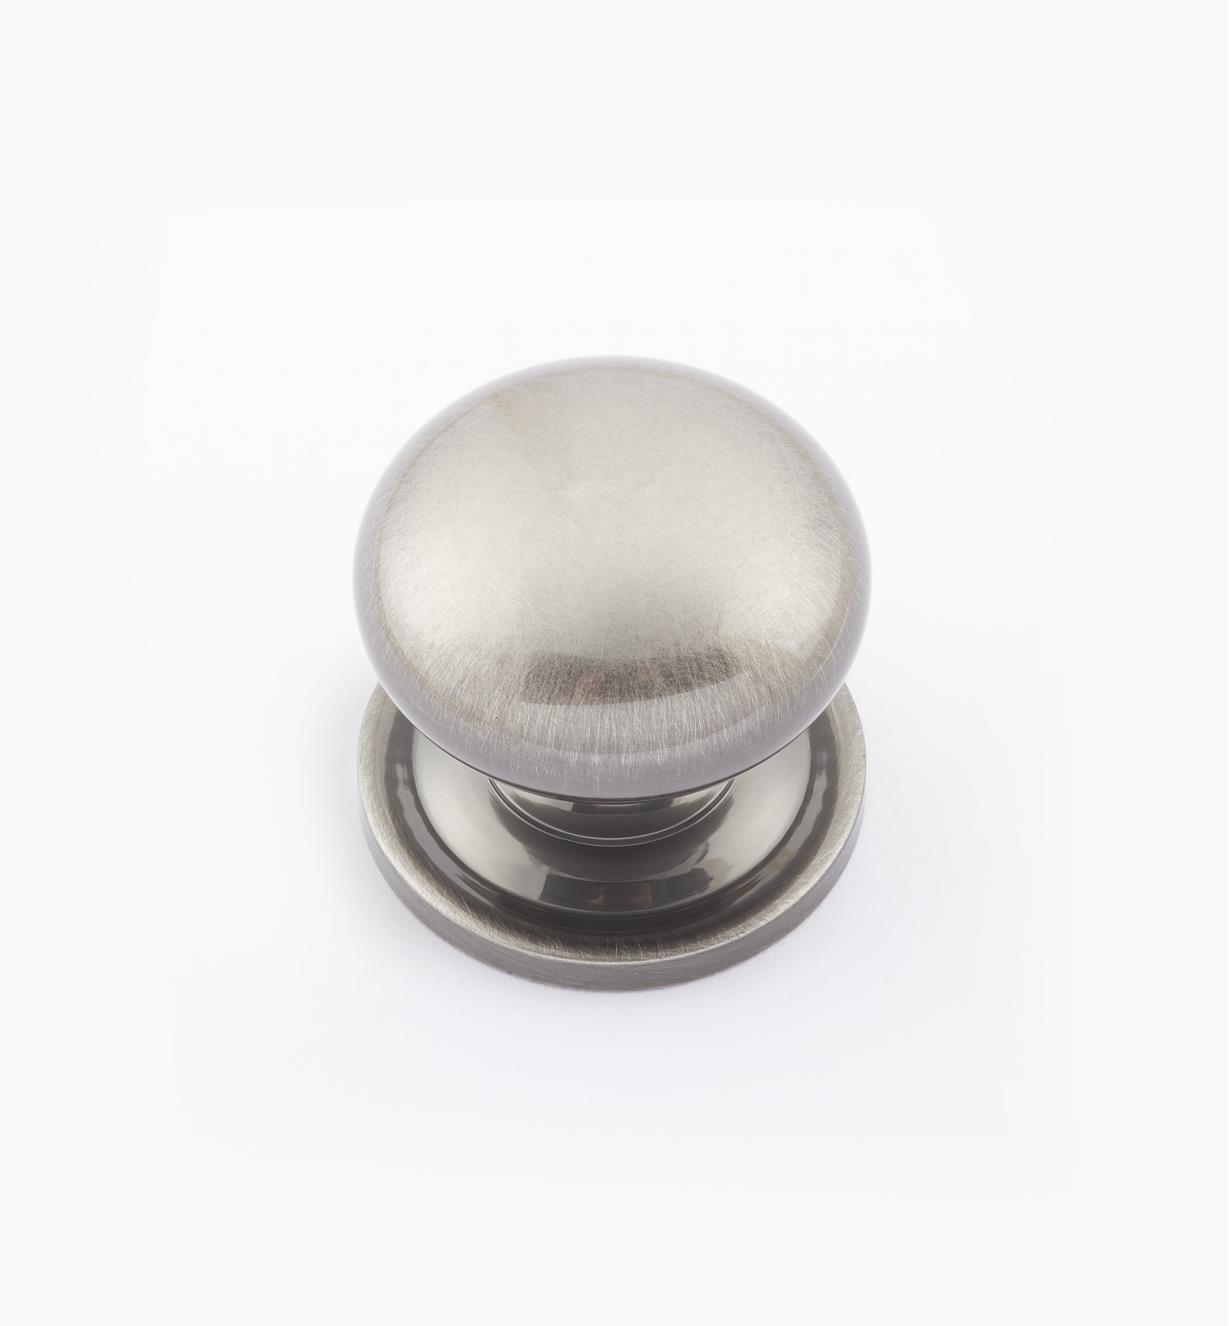 02W1541 - Bouton bombé en laiton de 1 po × 7/8 po, fini nickel antique